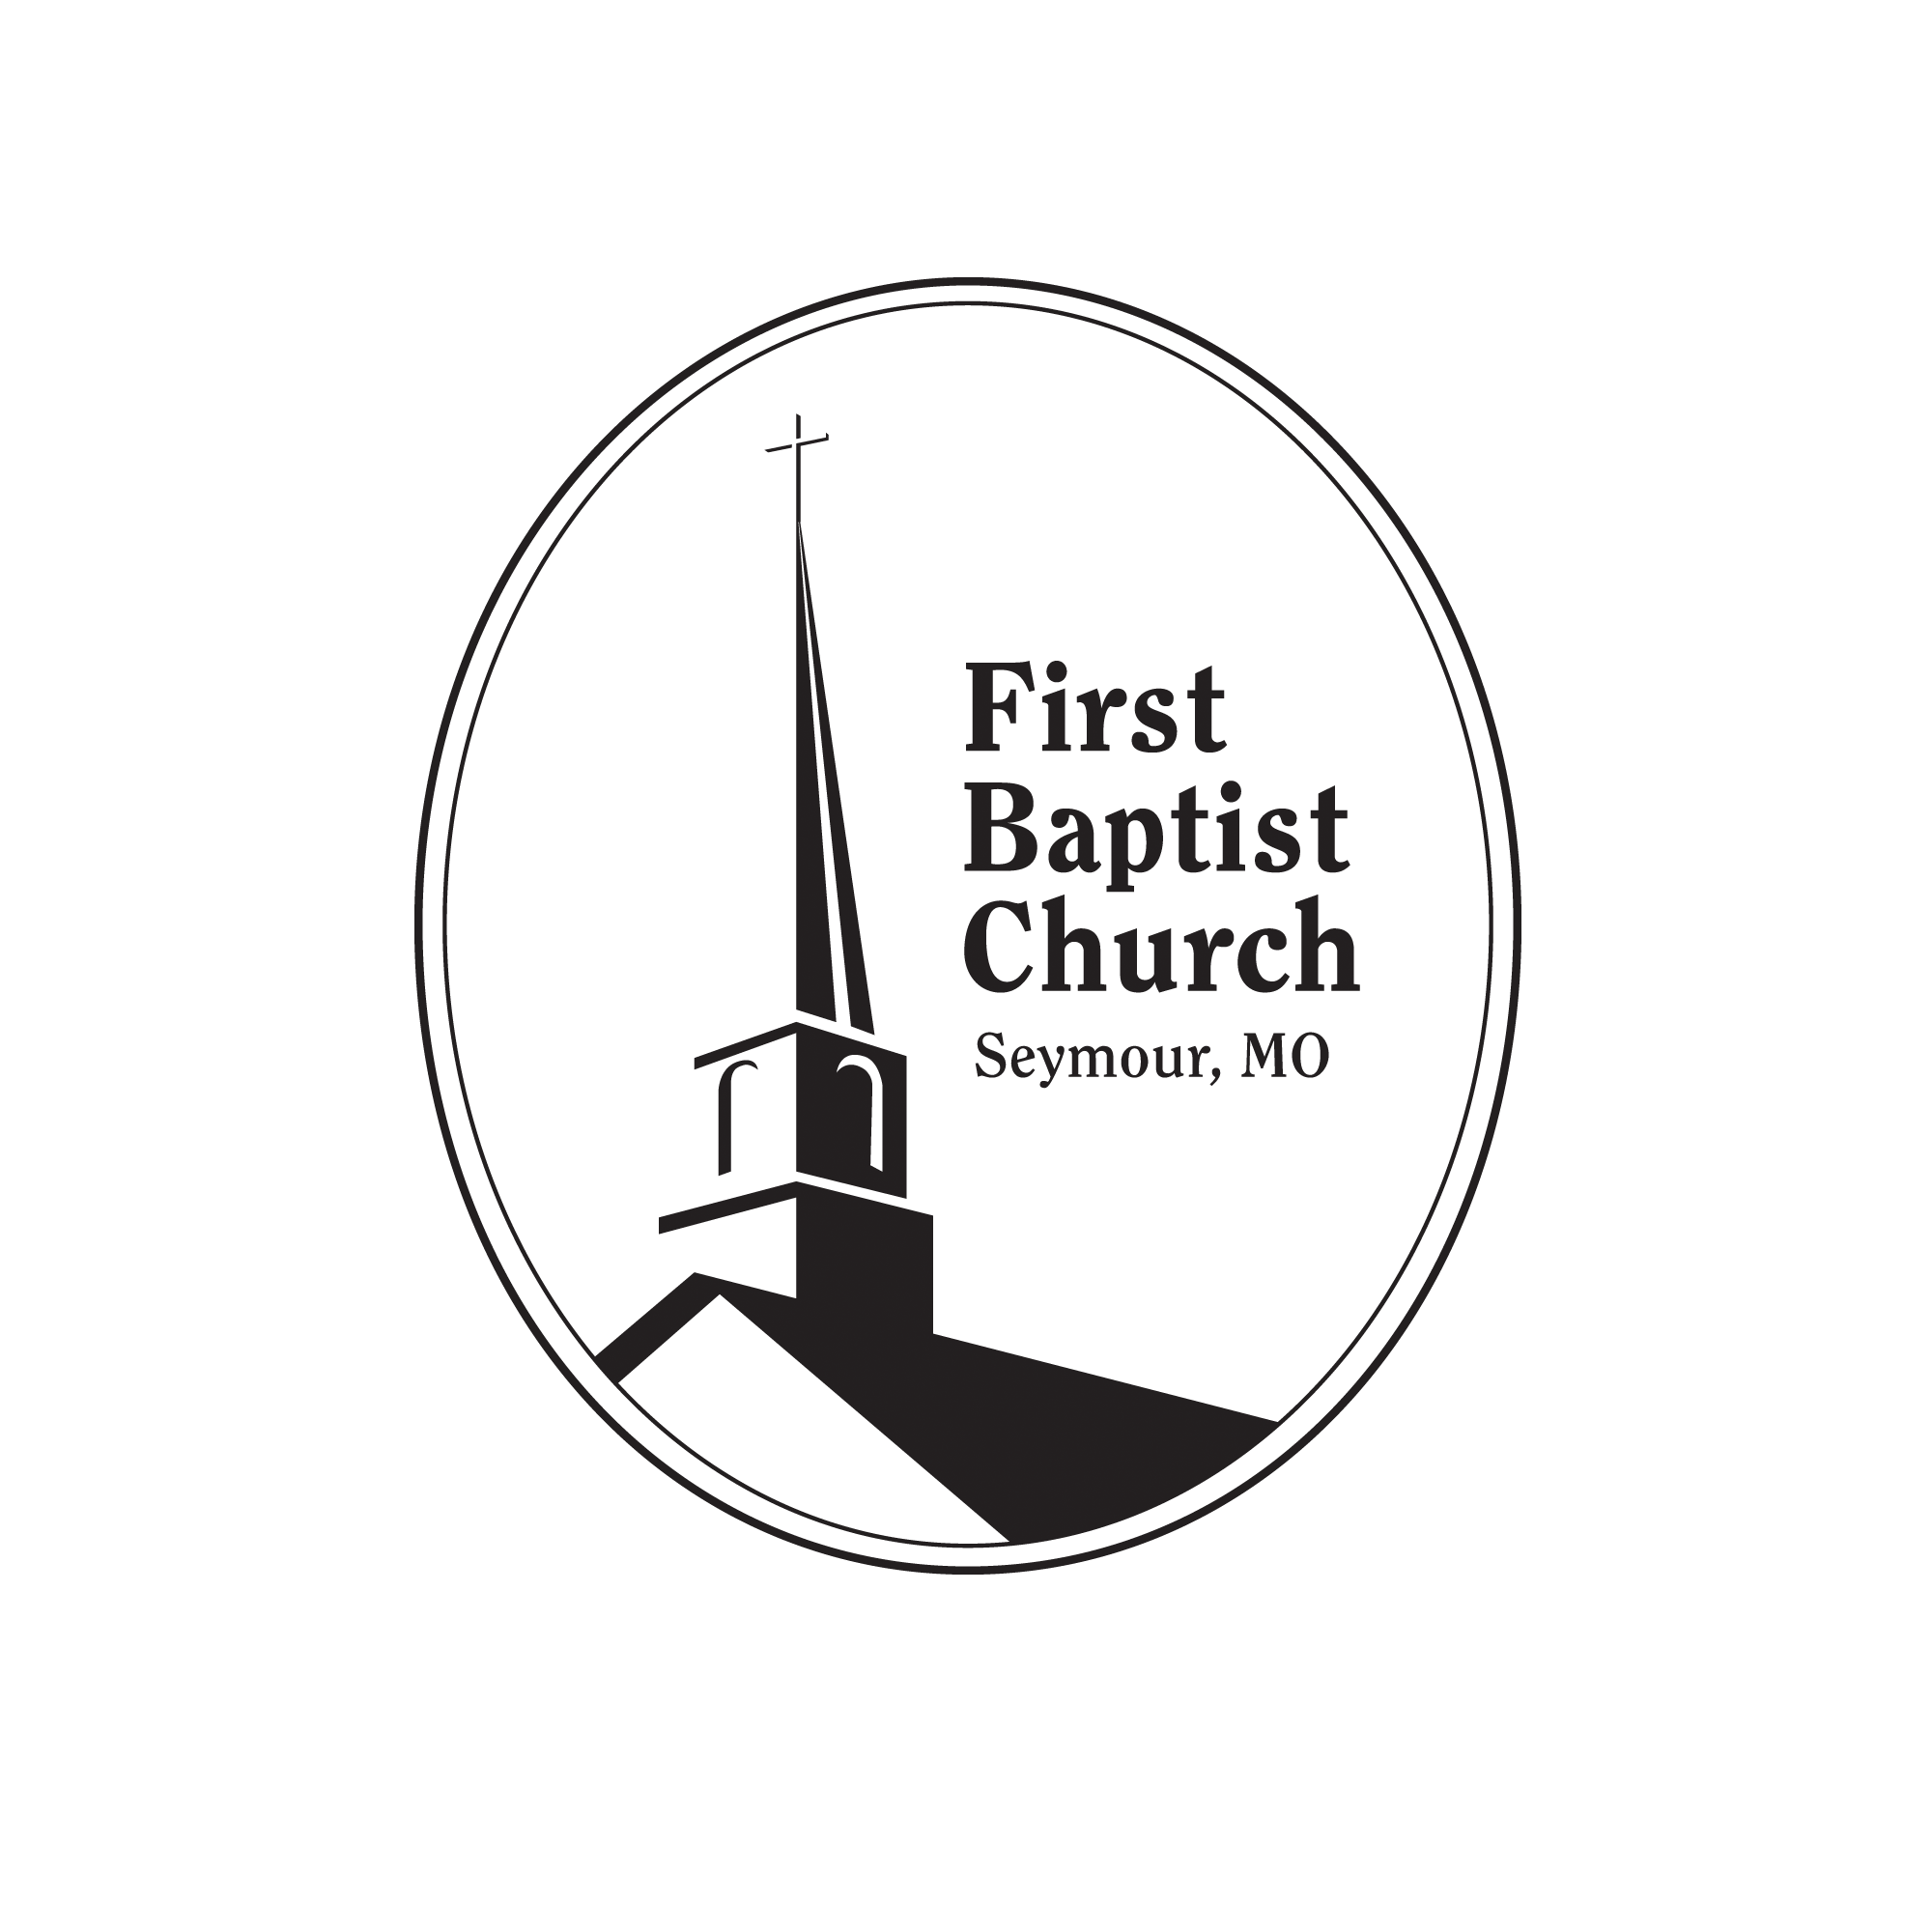 First Baptist Church- Seymour, MO